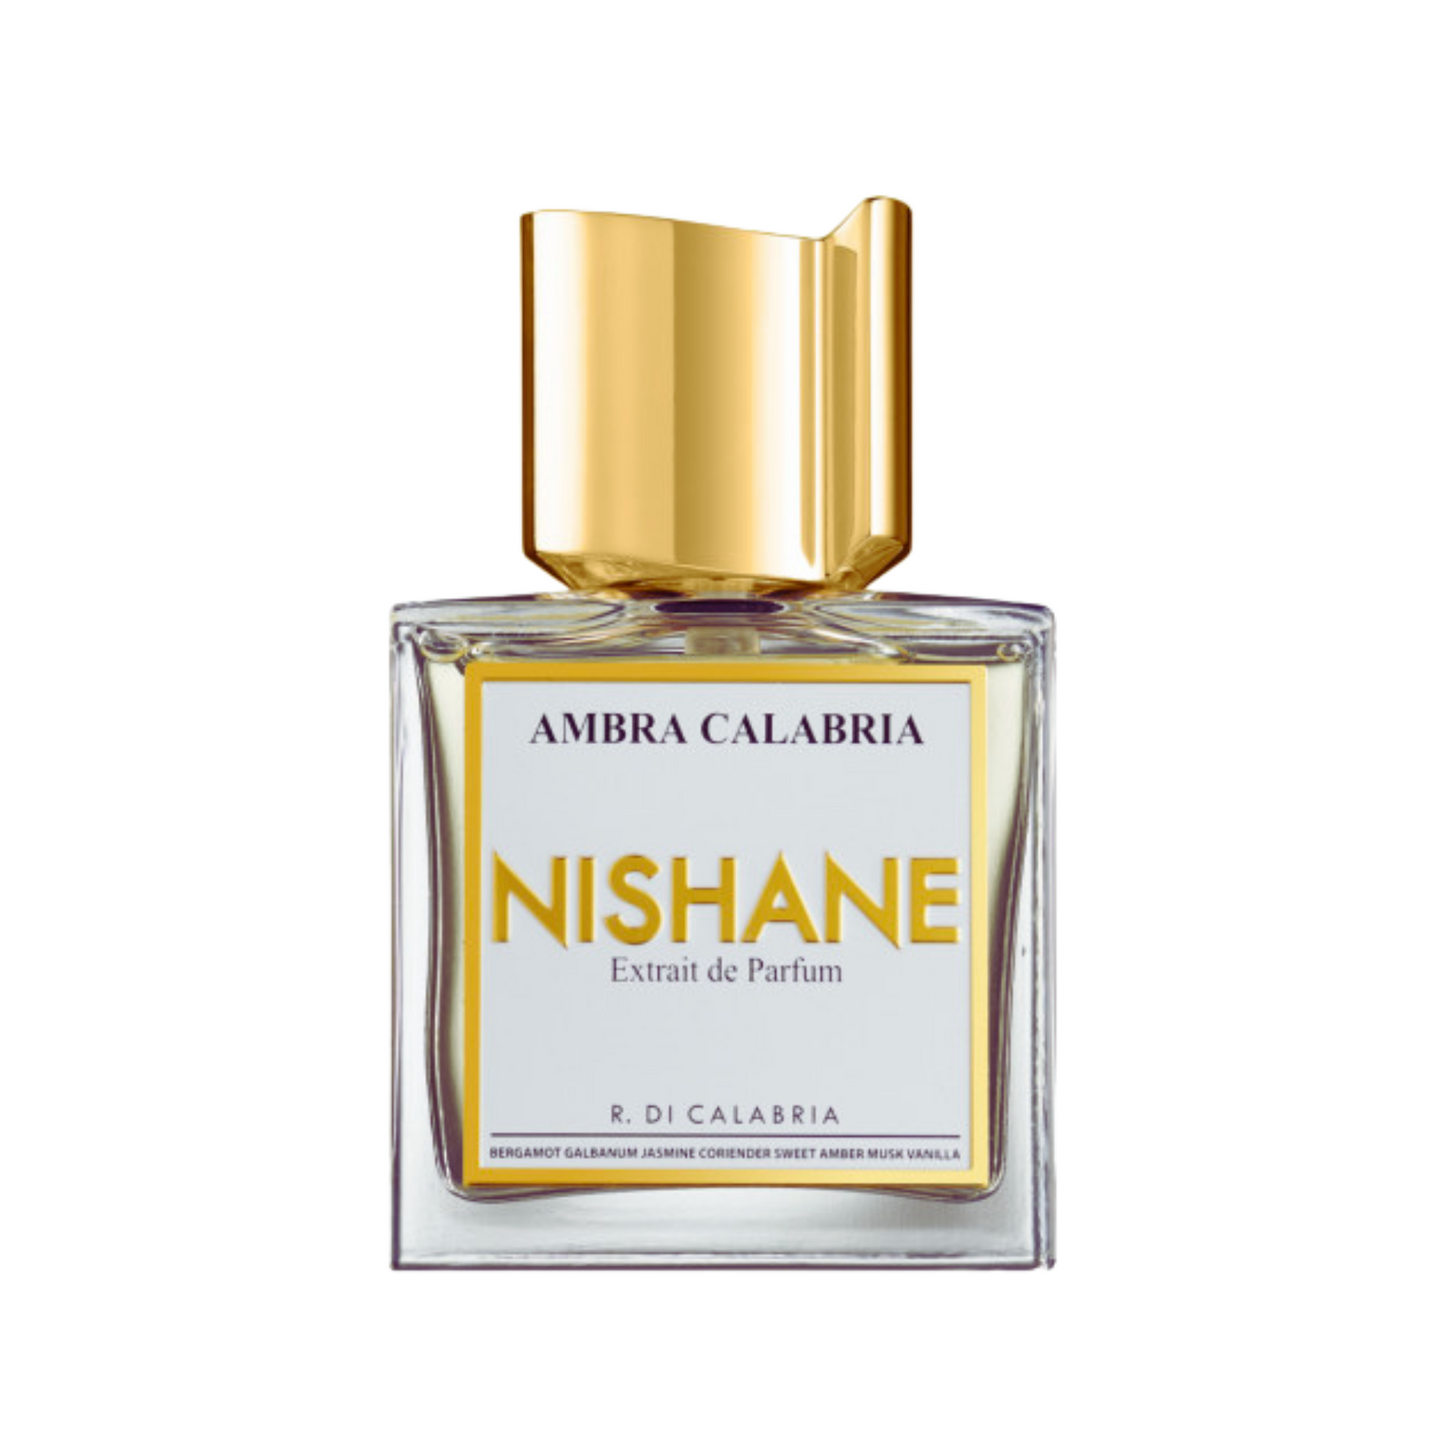 Ambra Calabria Nishane 50ml Extrait de Parfum